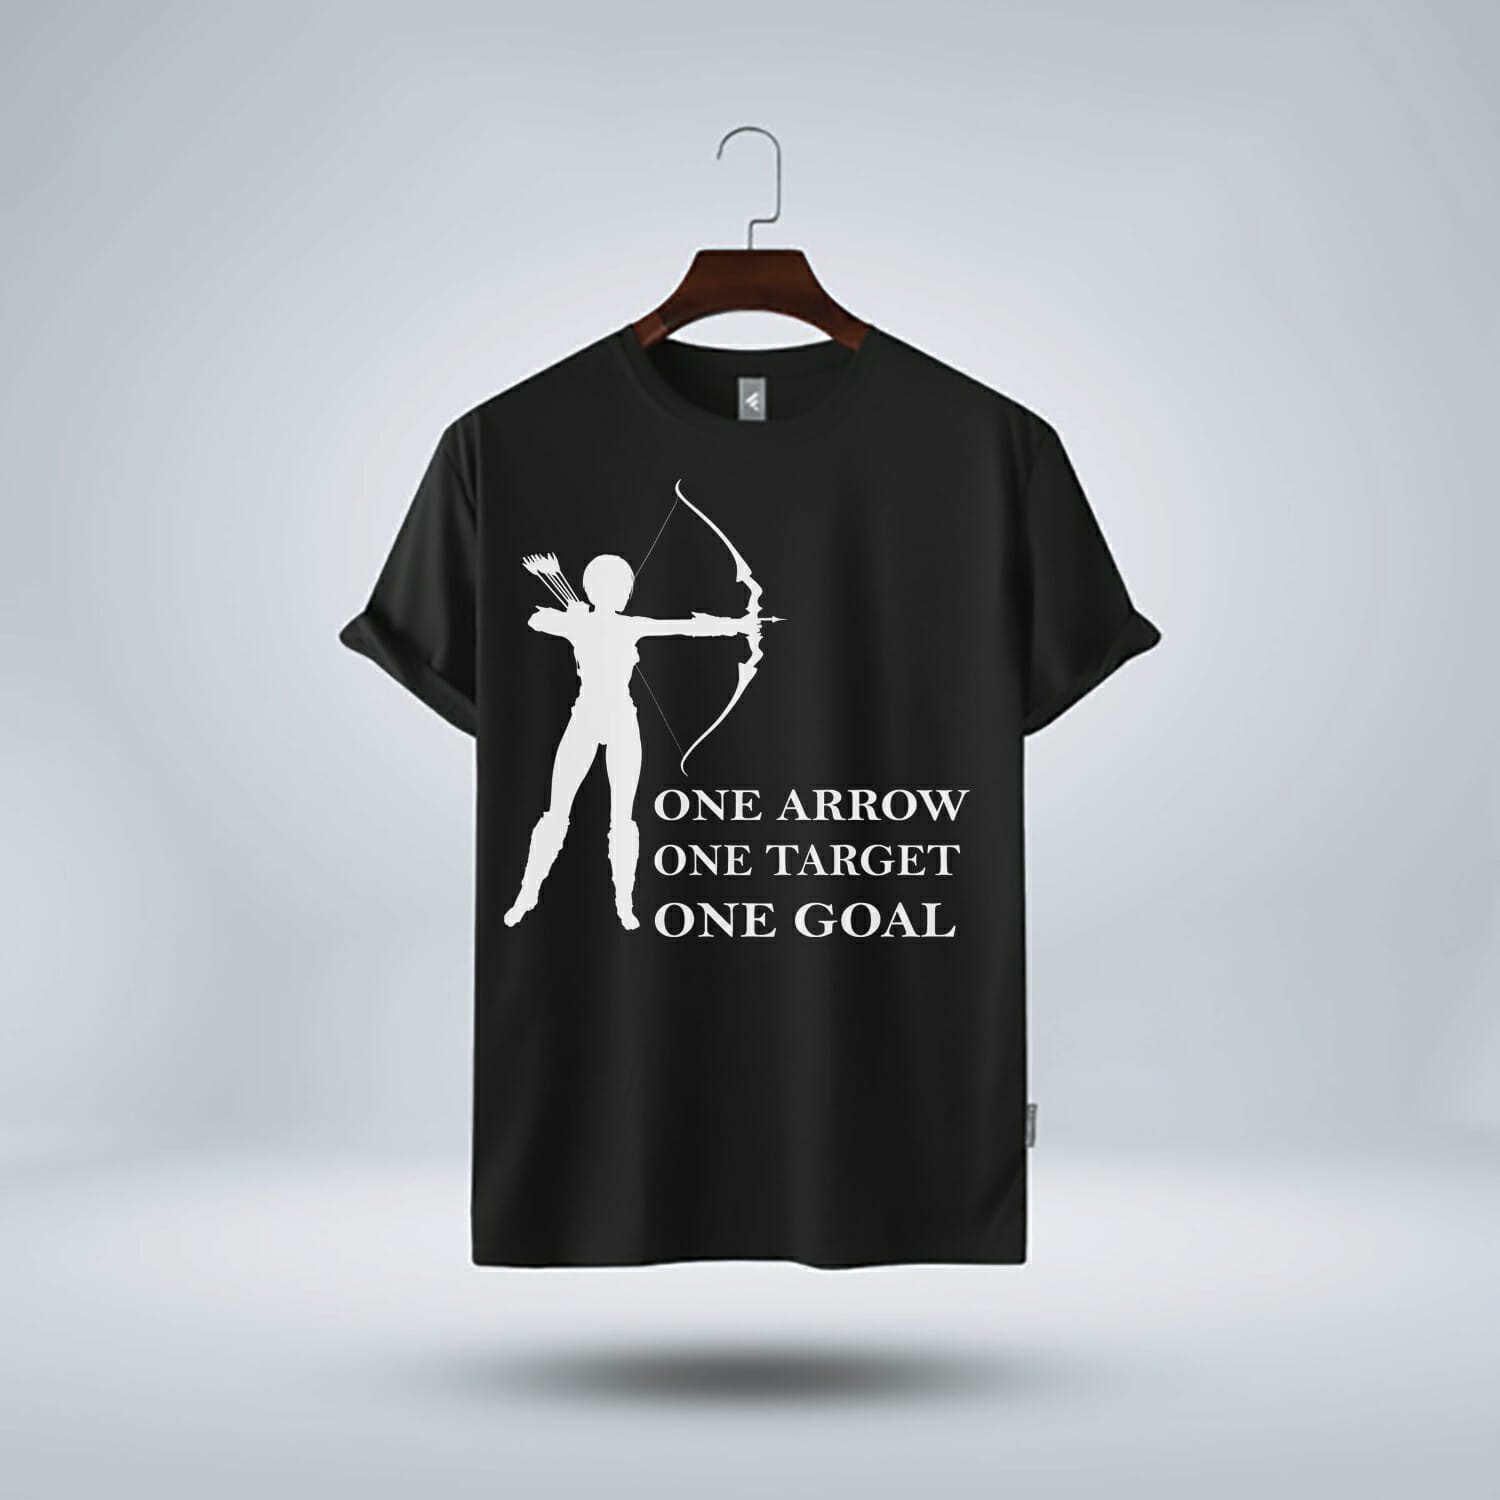 One Arrow One Target One Goal T-Shirt Design